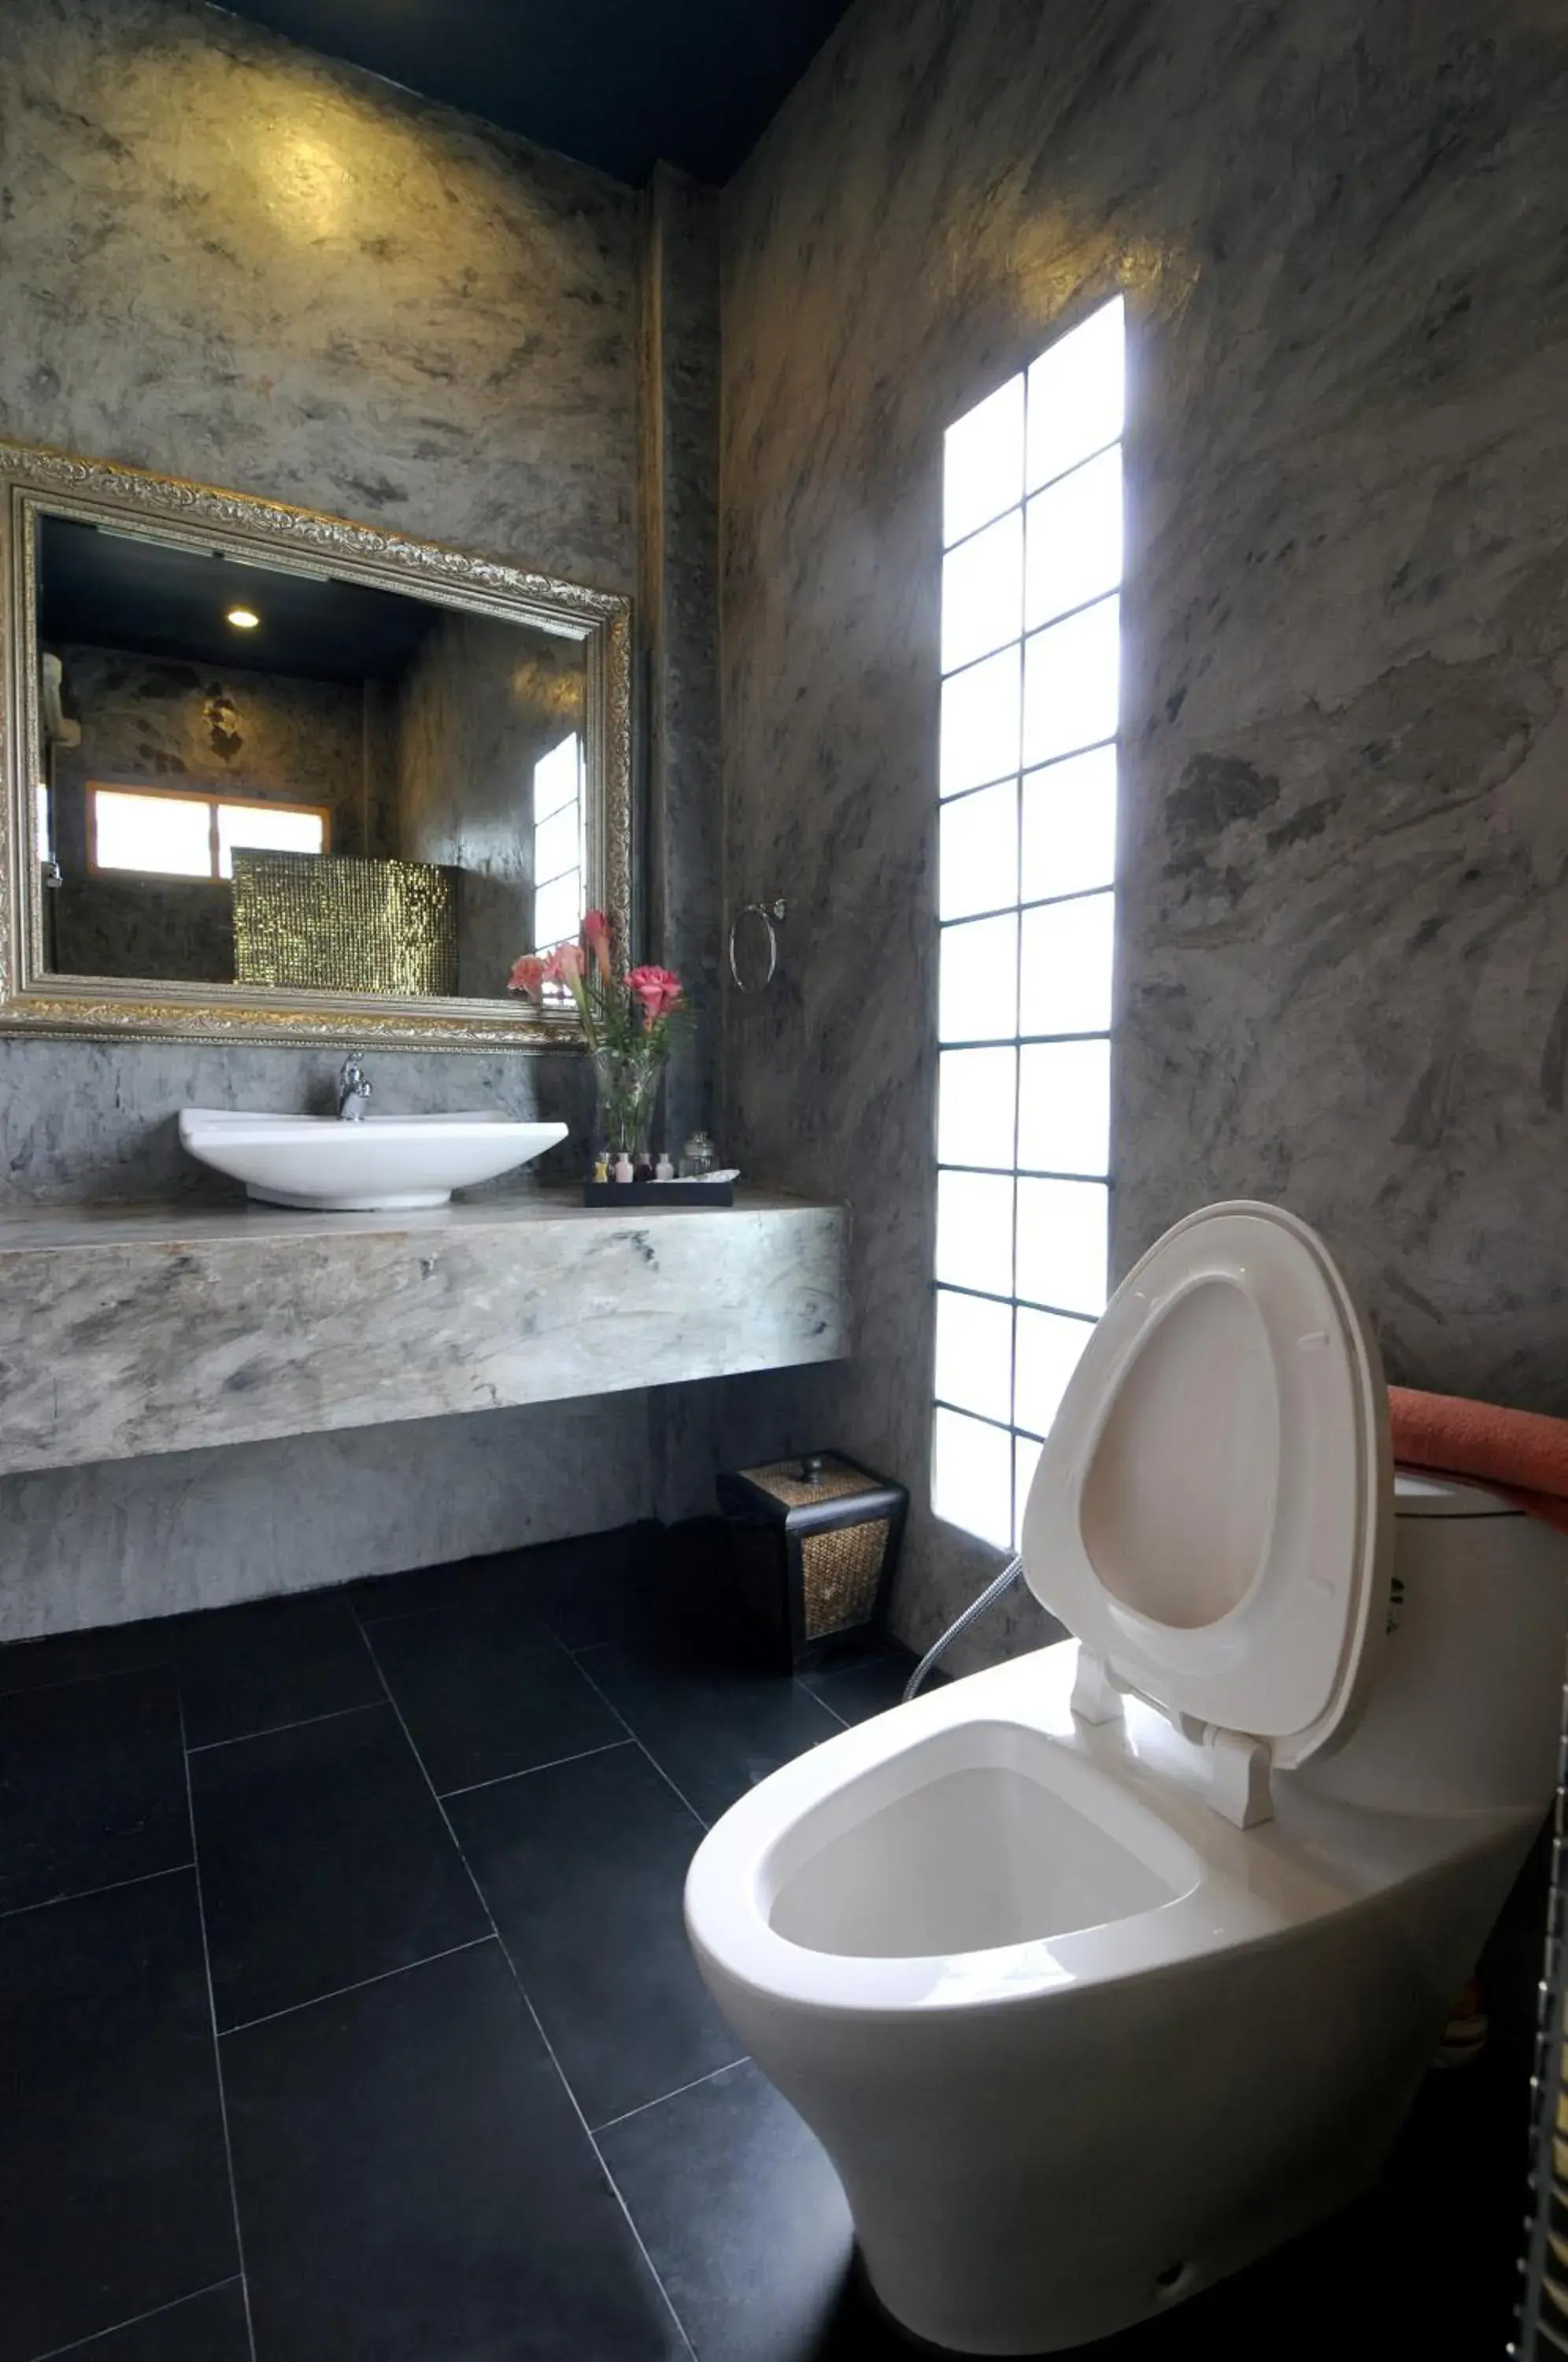 Bathroom in Love Bridge House Resort